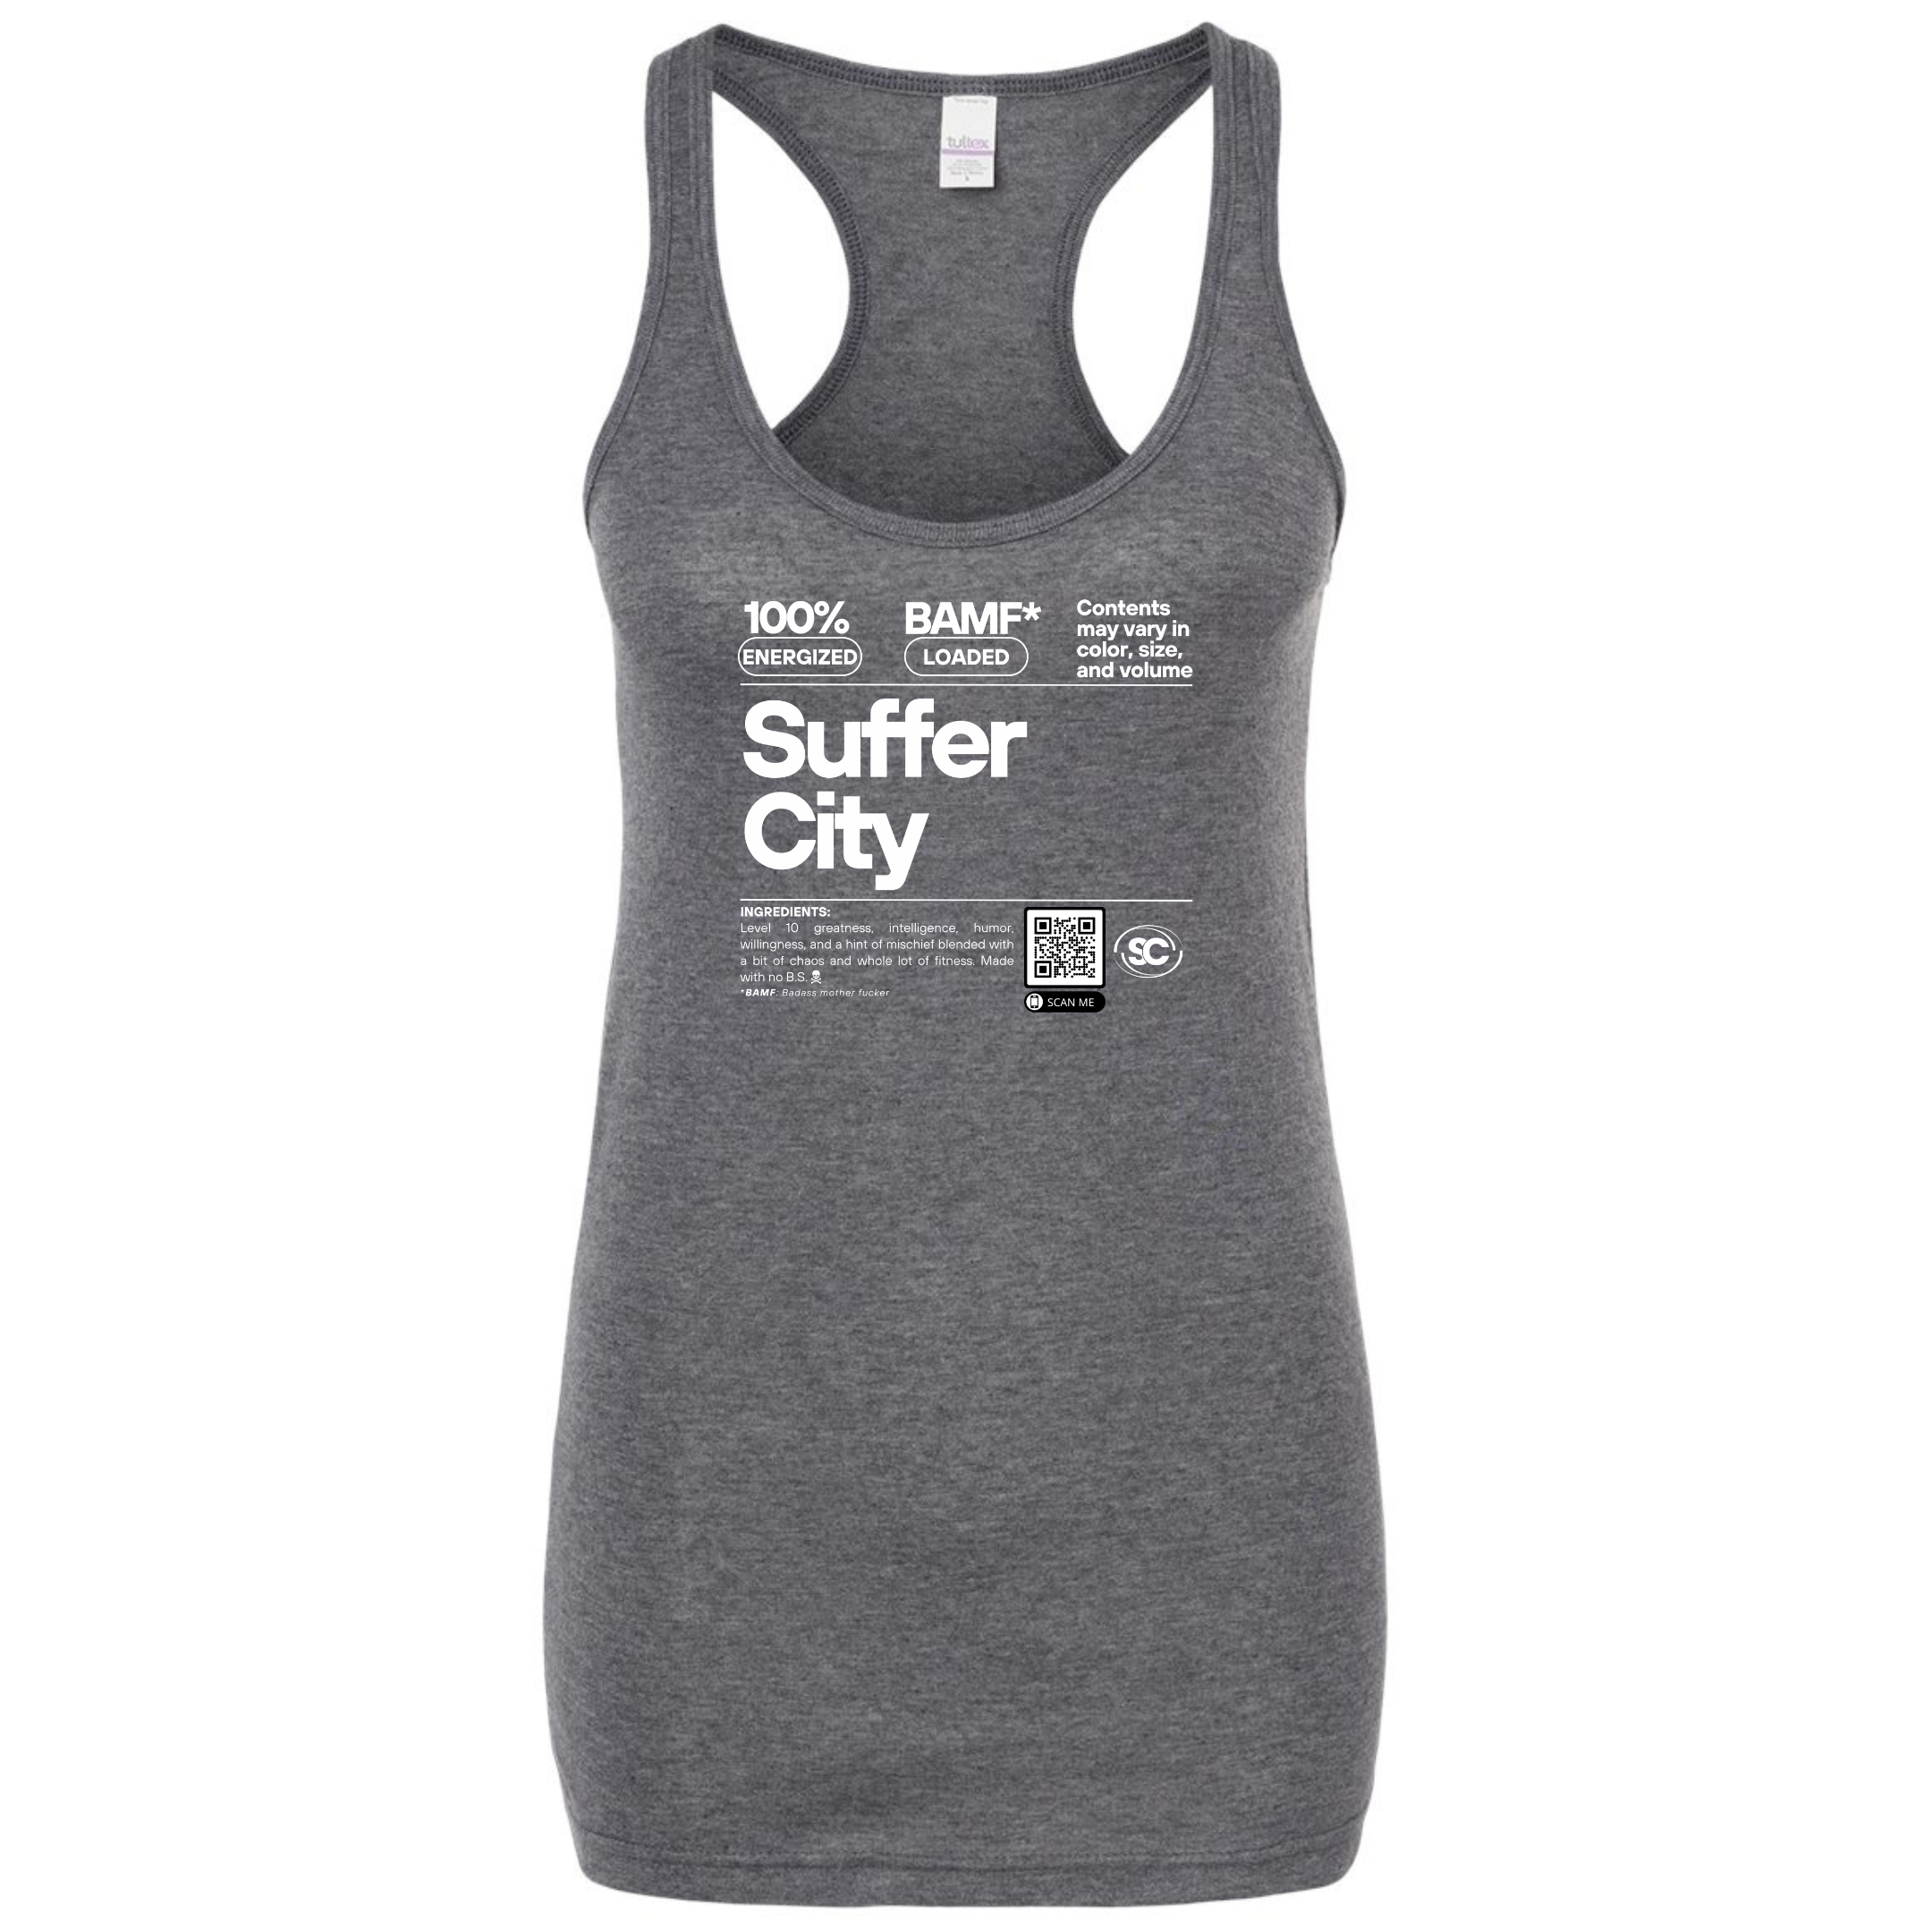 BAMF Suffer City “Cooler" Options